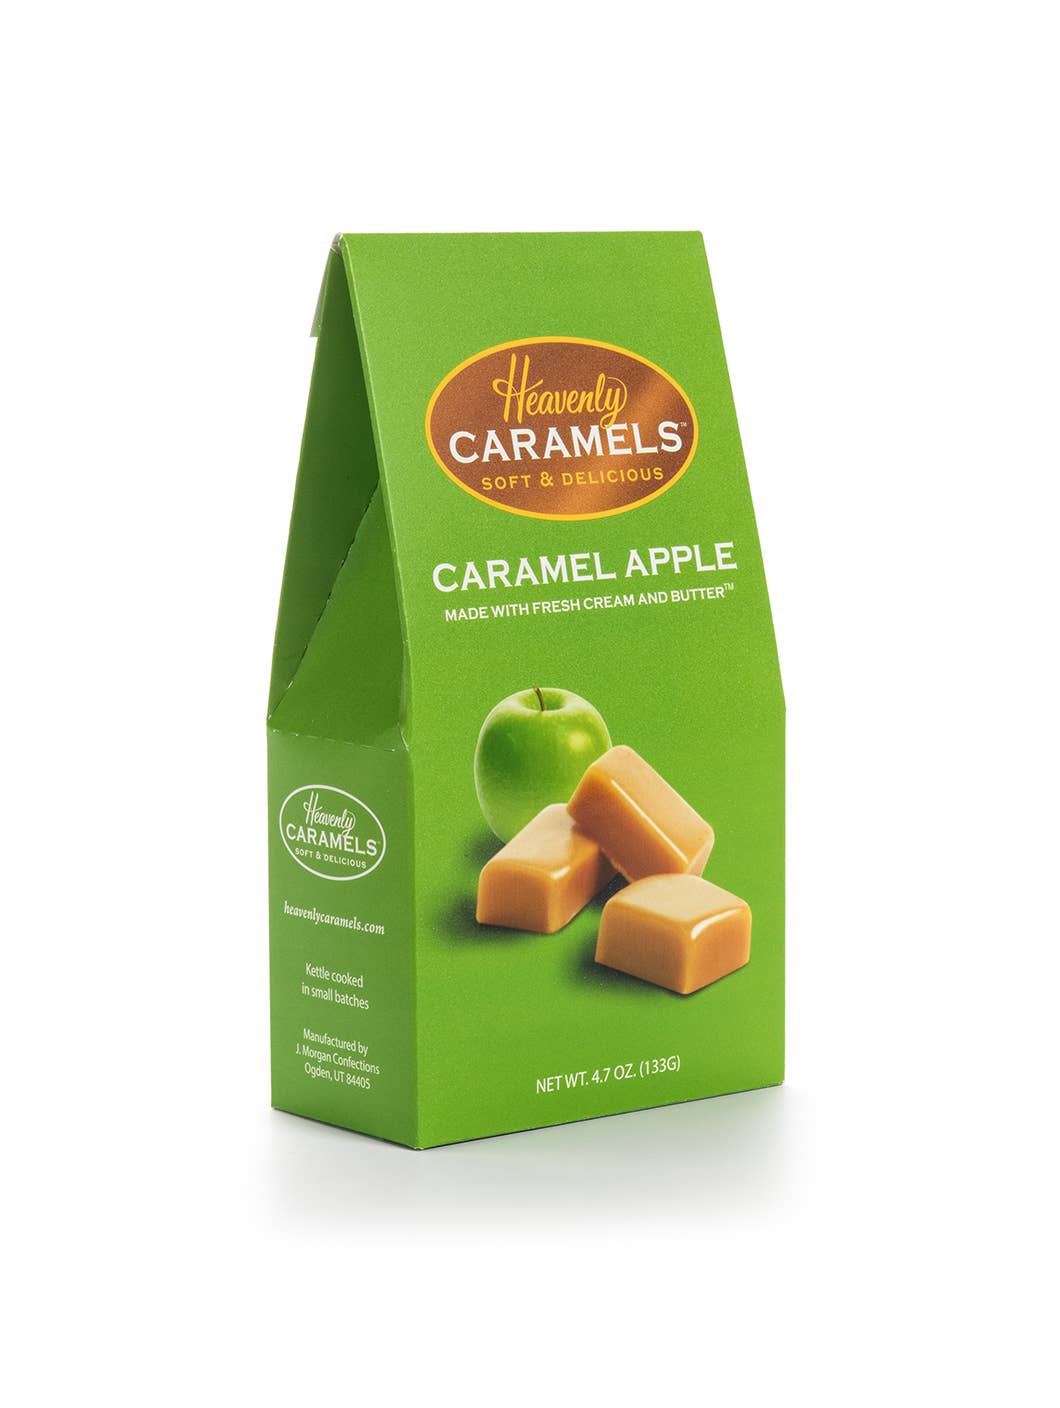 Heavenly Caramels Caramel Apple 4.7oz